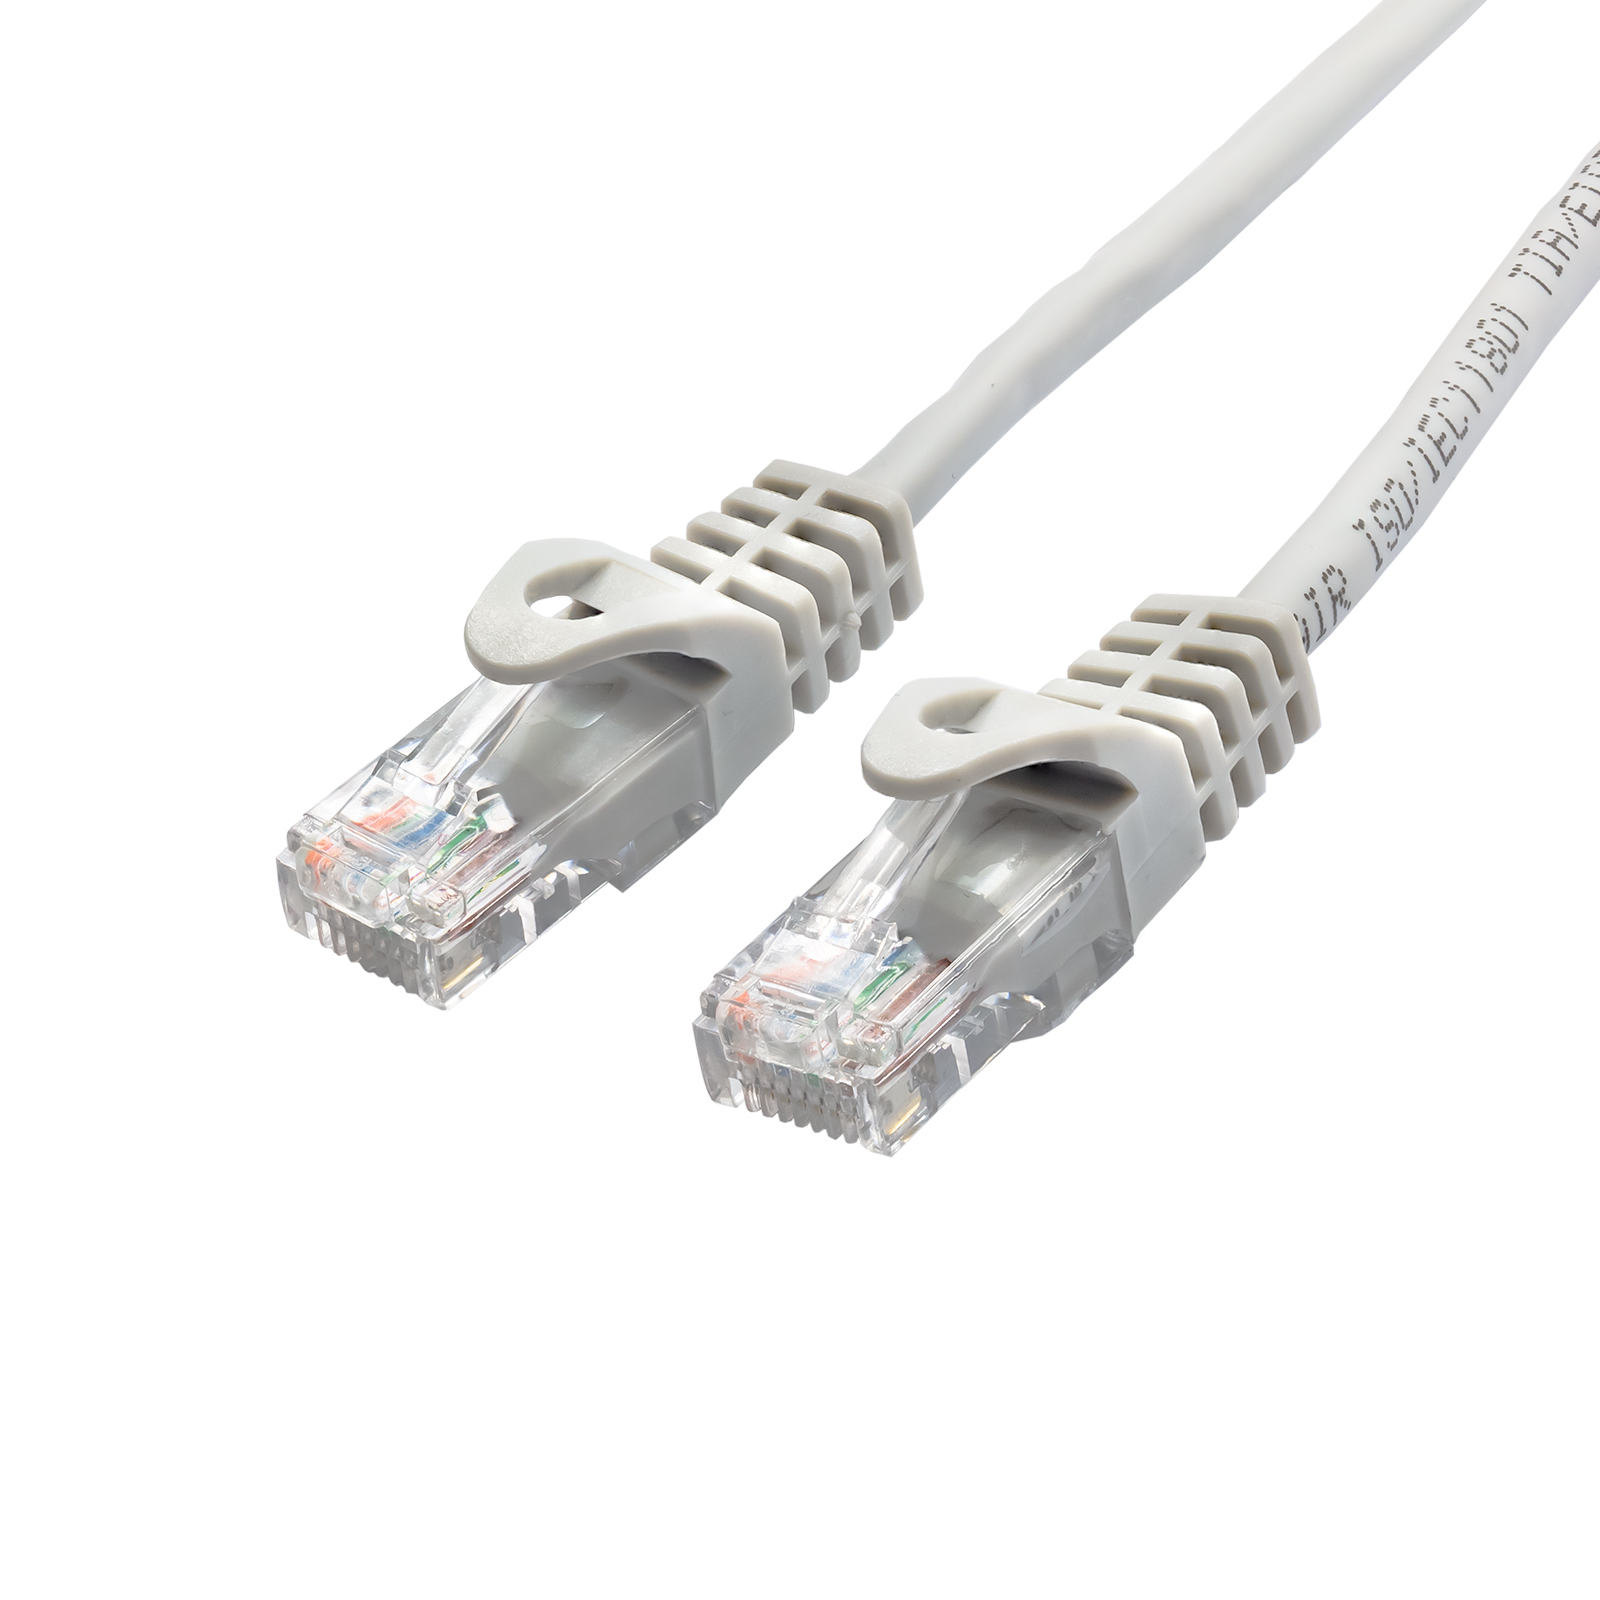 Cavo Di Rete Lan Ethernet Rj45 15 Metri Categoria 5 Prolunga 15mt Utp 